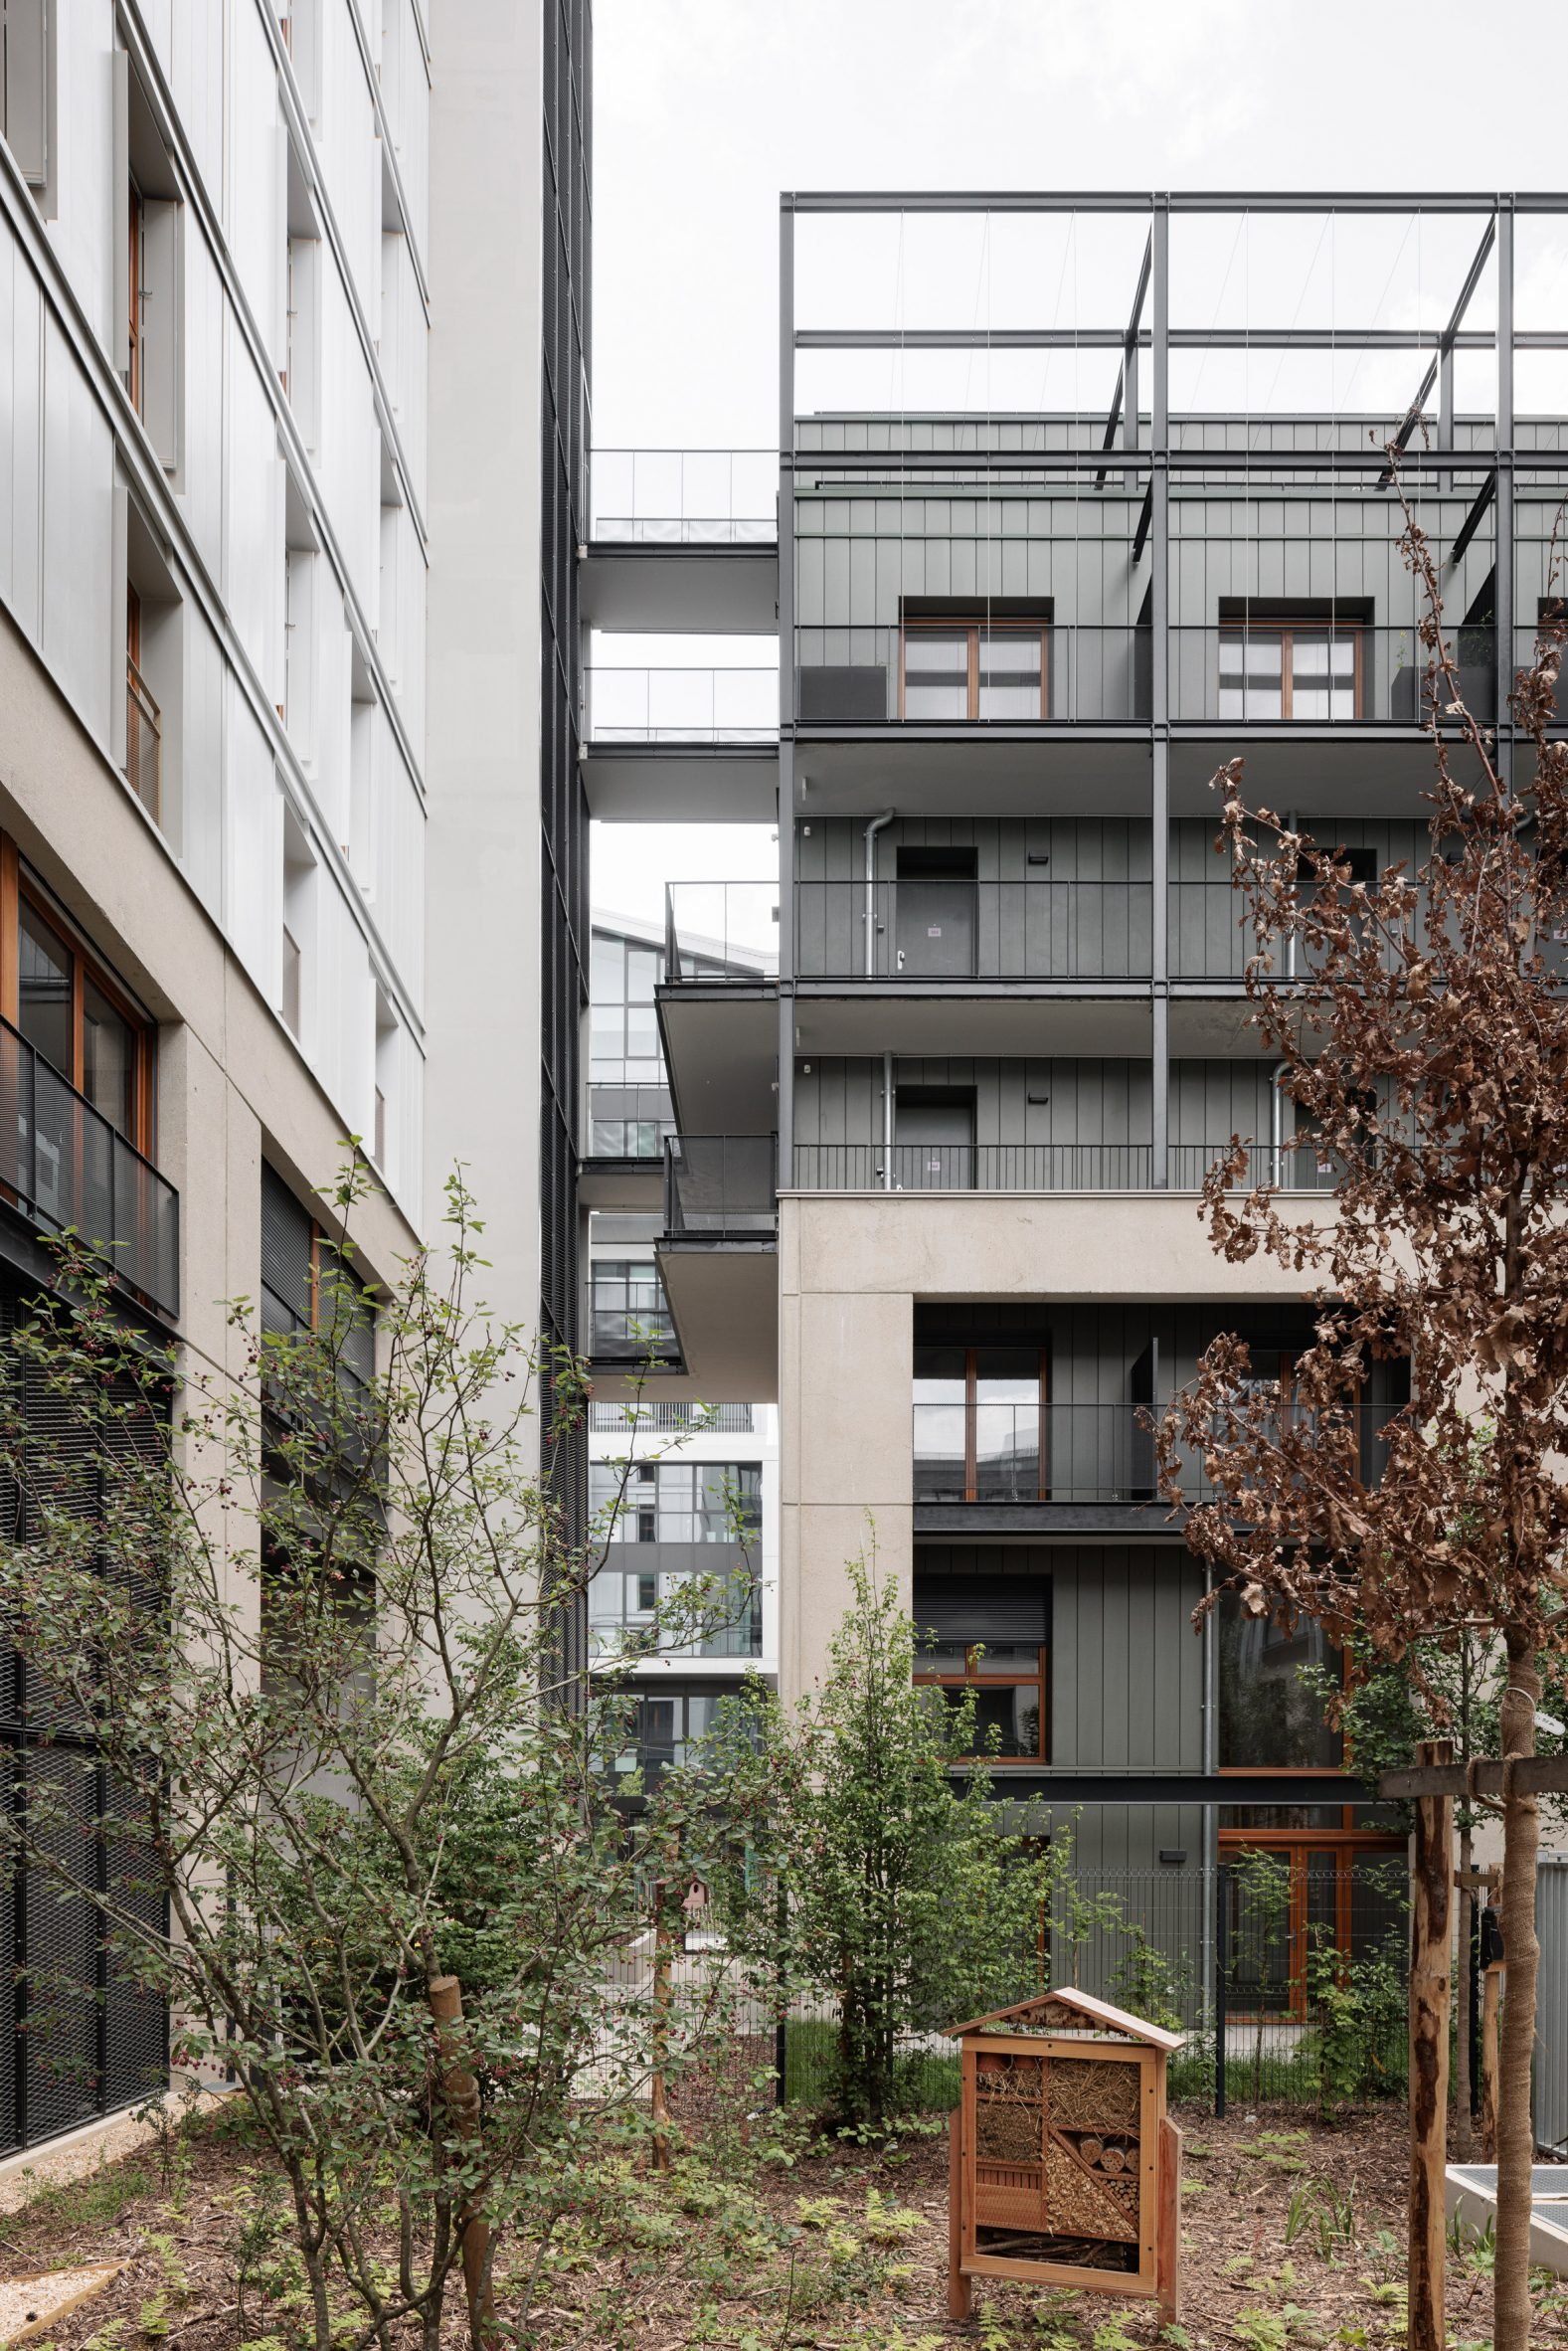 Courtyard of Parisian apartment block